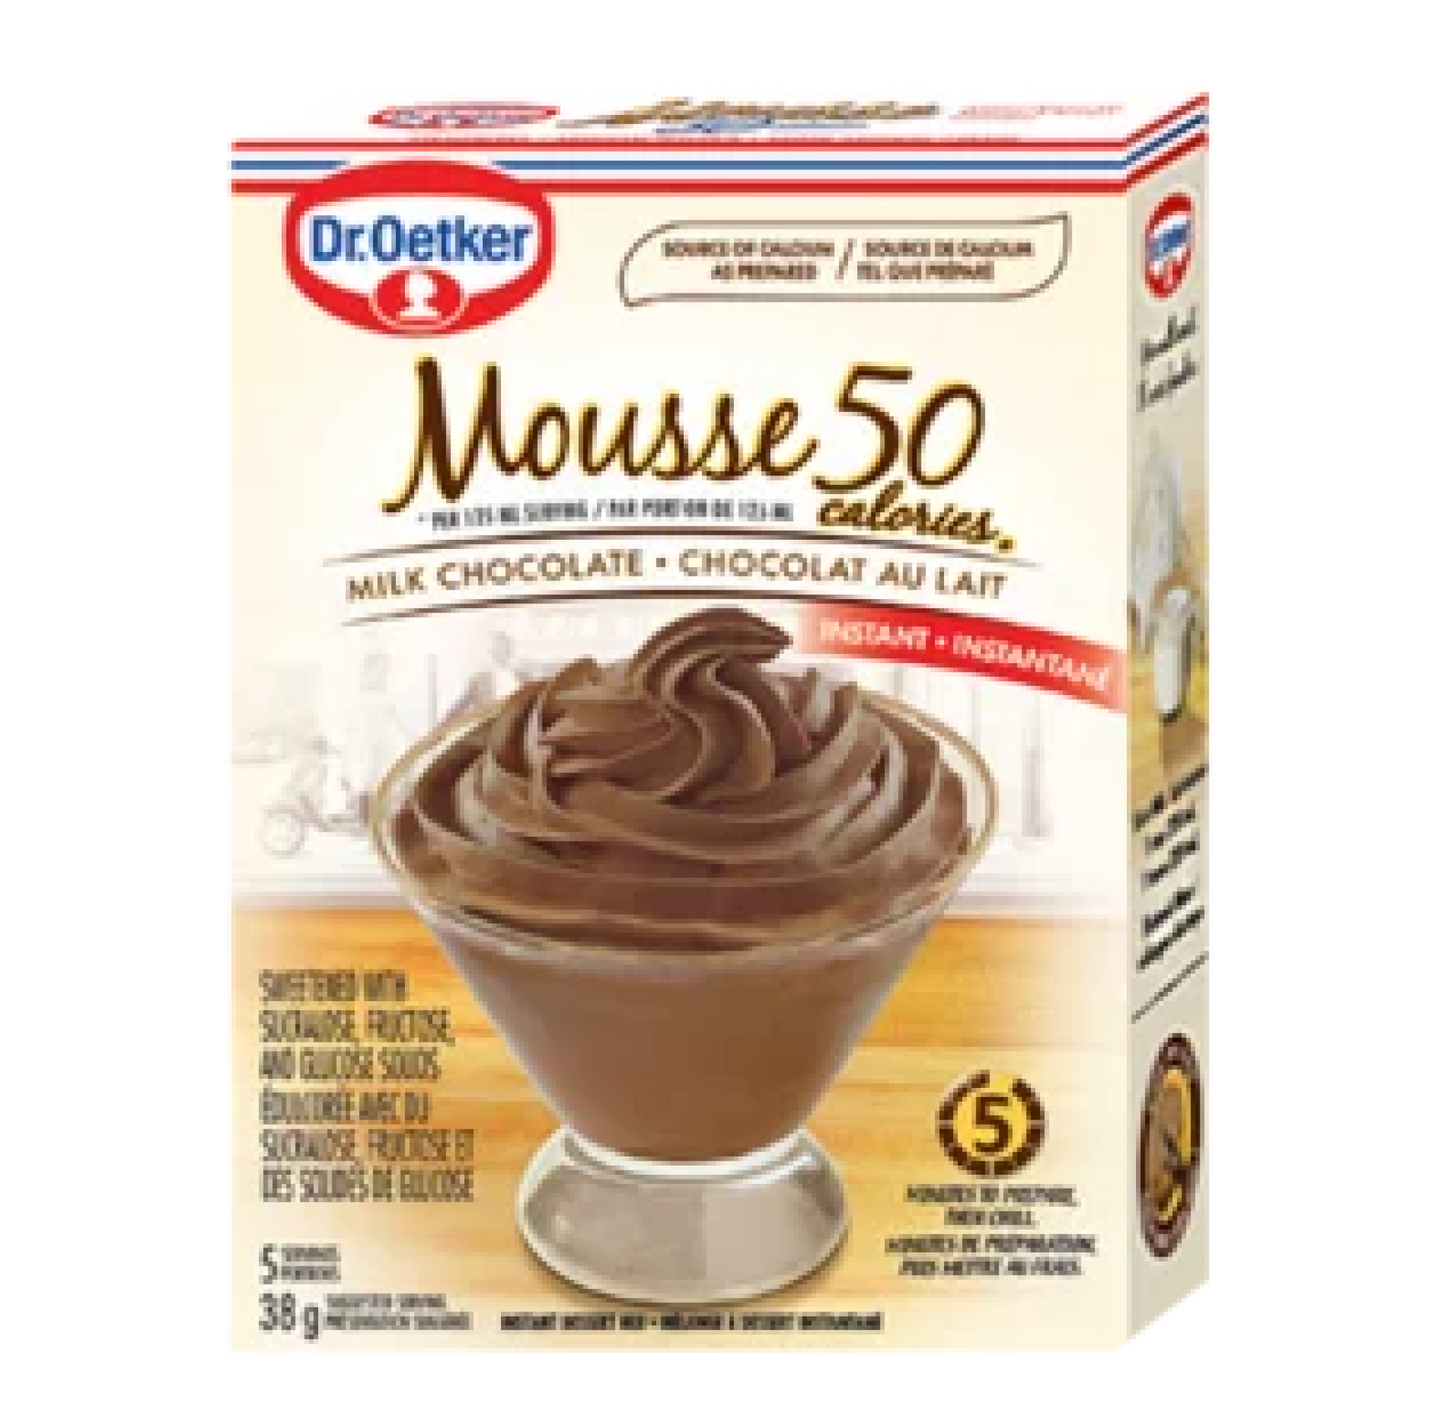 Dr. Oetker Chocolate Mousse Mix 50 Calories 38g